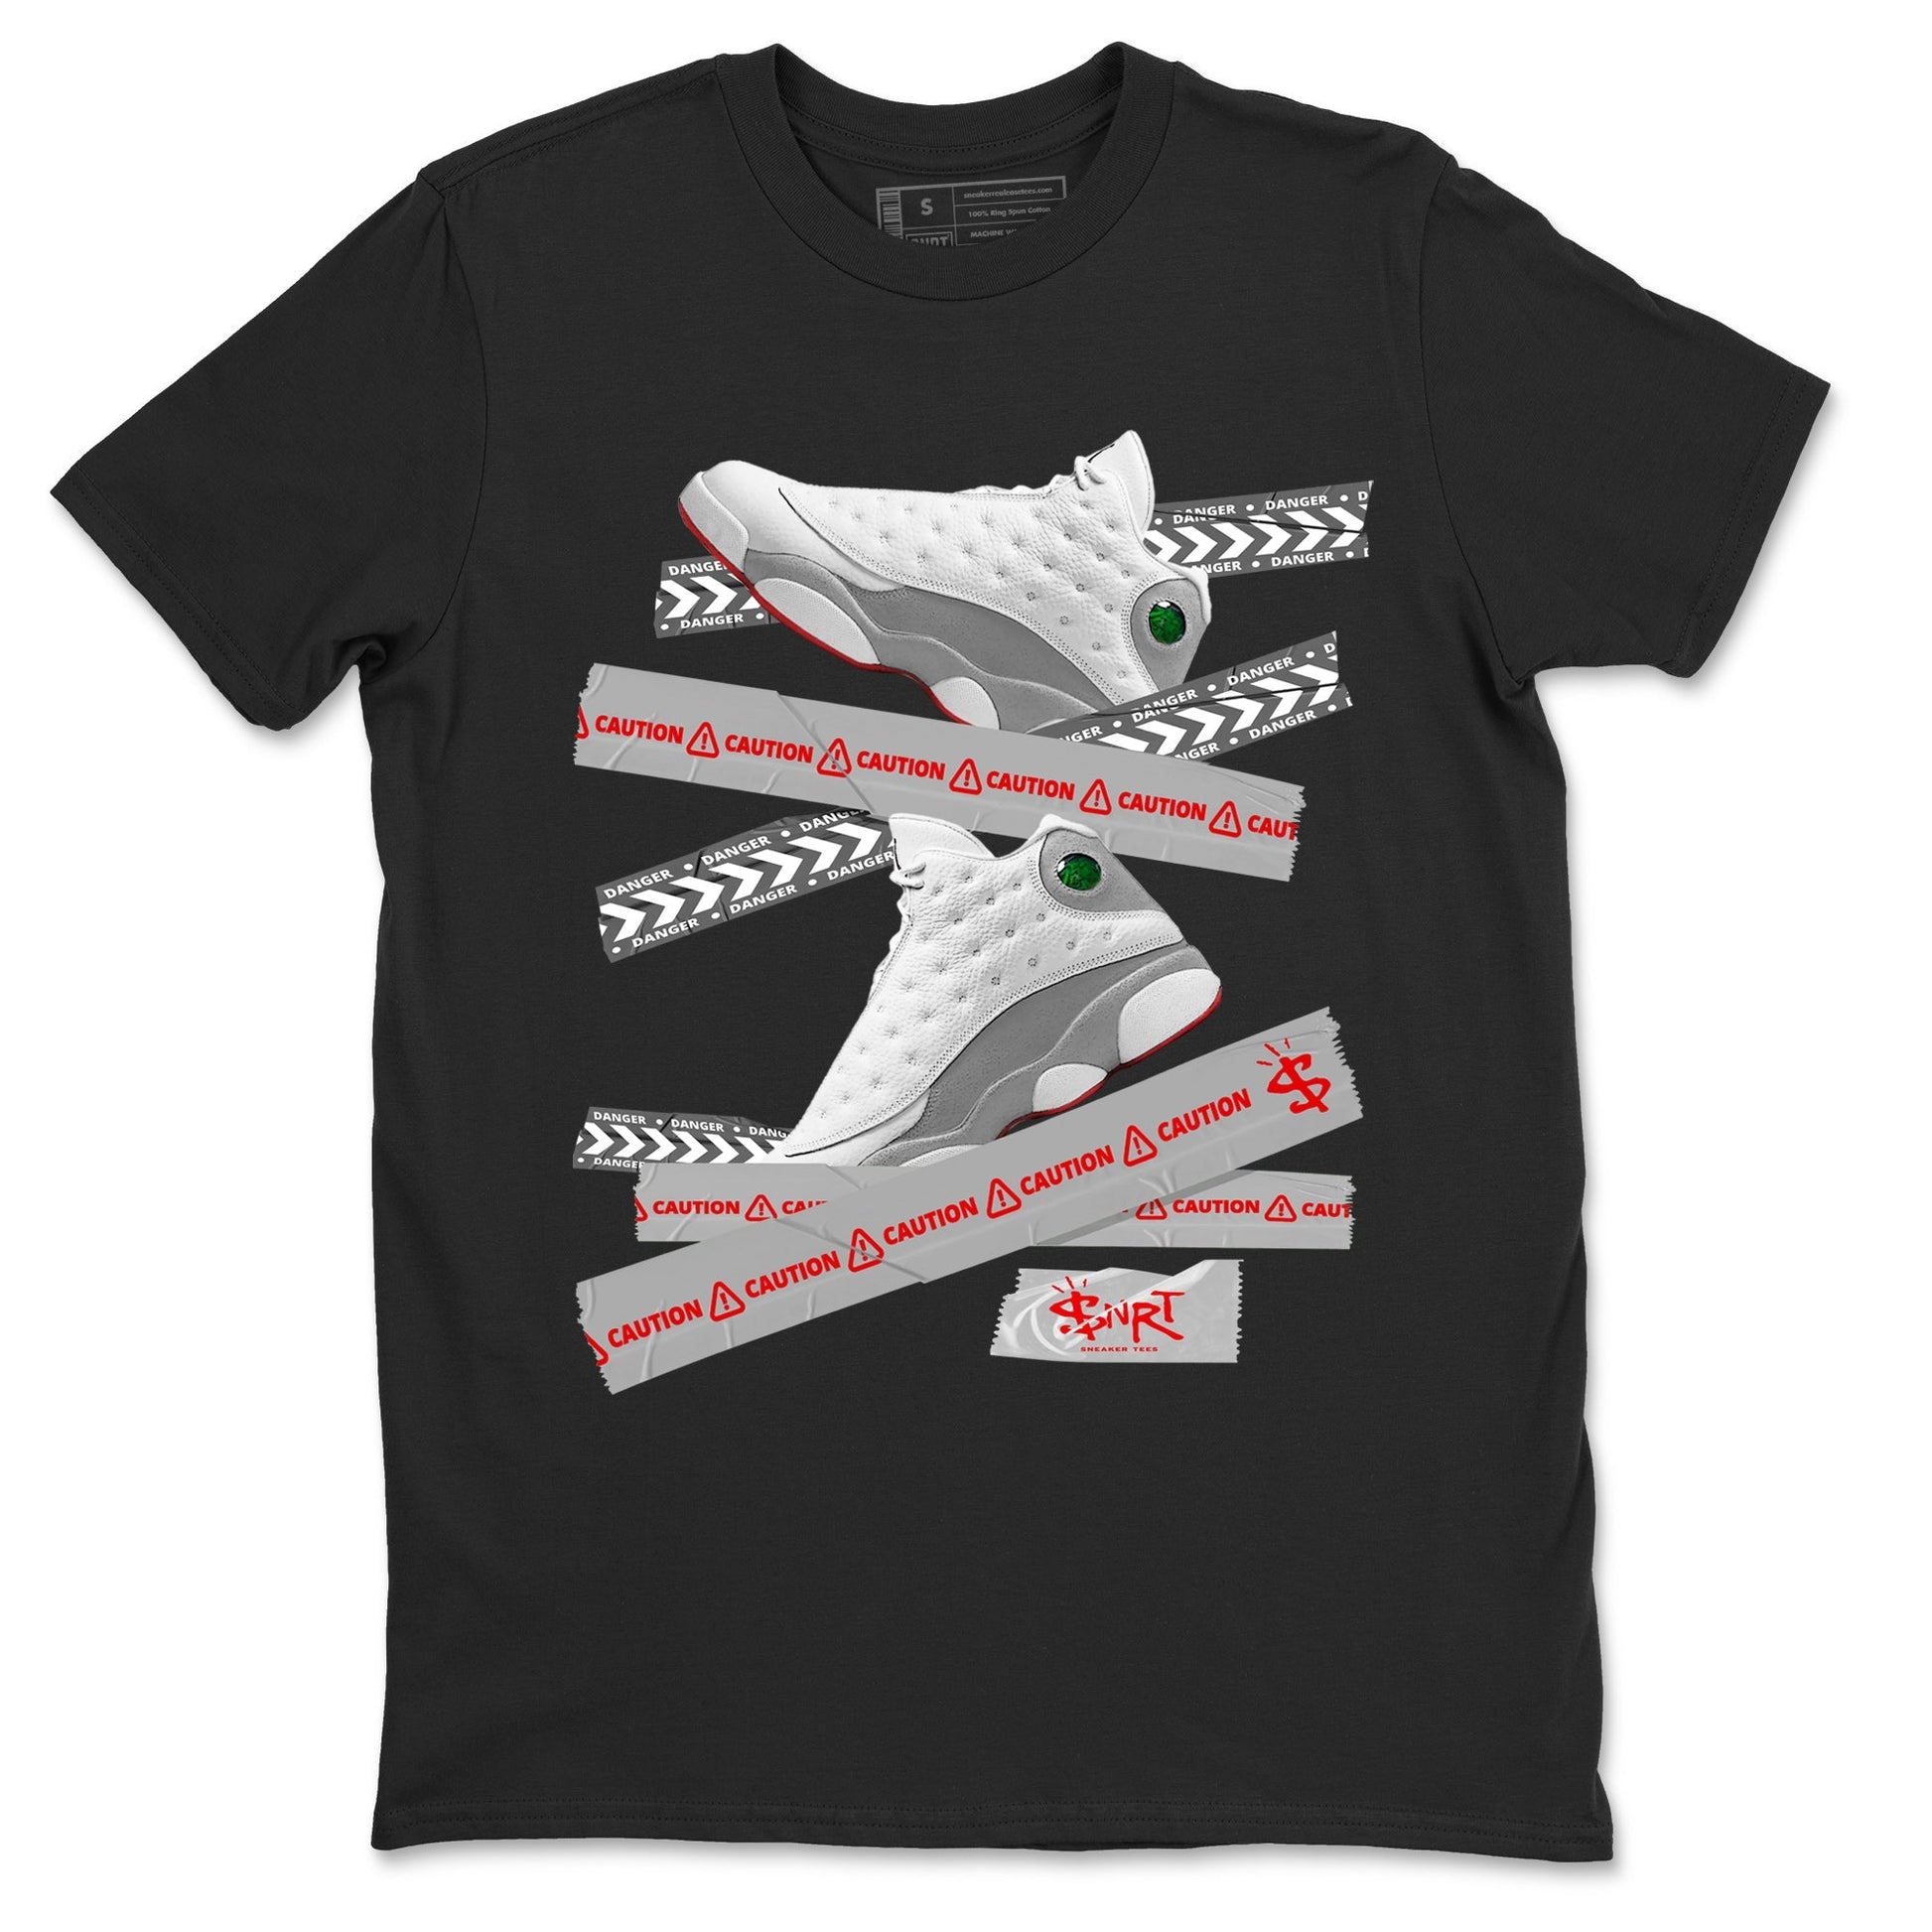 Air Jordan 13 Wolf Grey Sneaker Match Tees Caution Tape Sneaker Tees 13s Wolf Grey Sneaker Release Tees Unisex Shirts Black 2